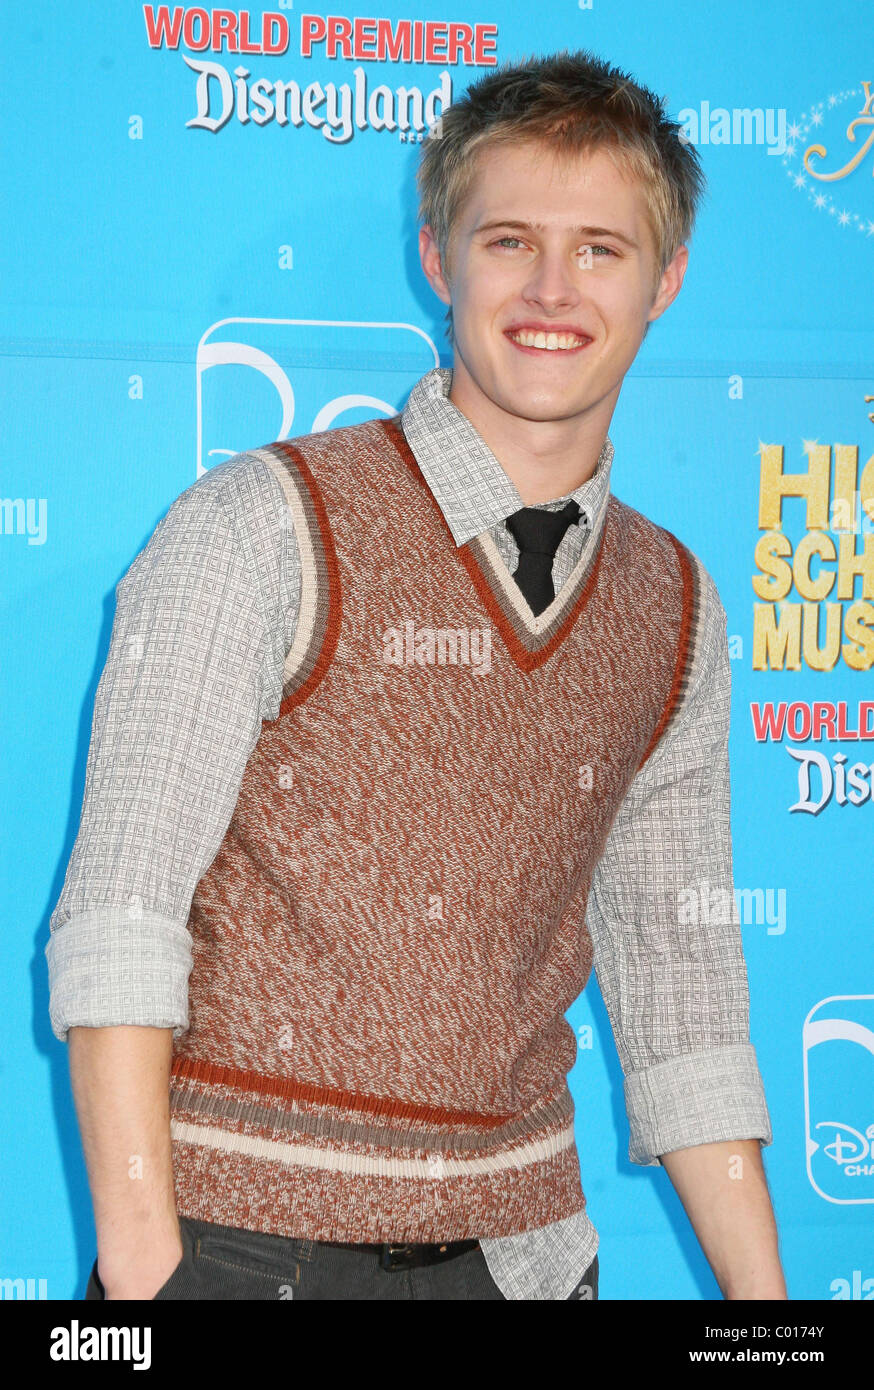 High School Musical' Star Lucas Grabeel Returns for Disney Plus